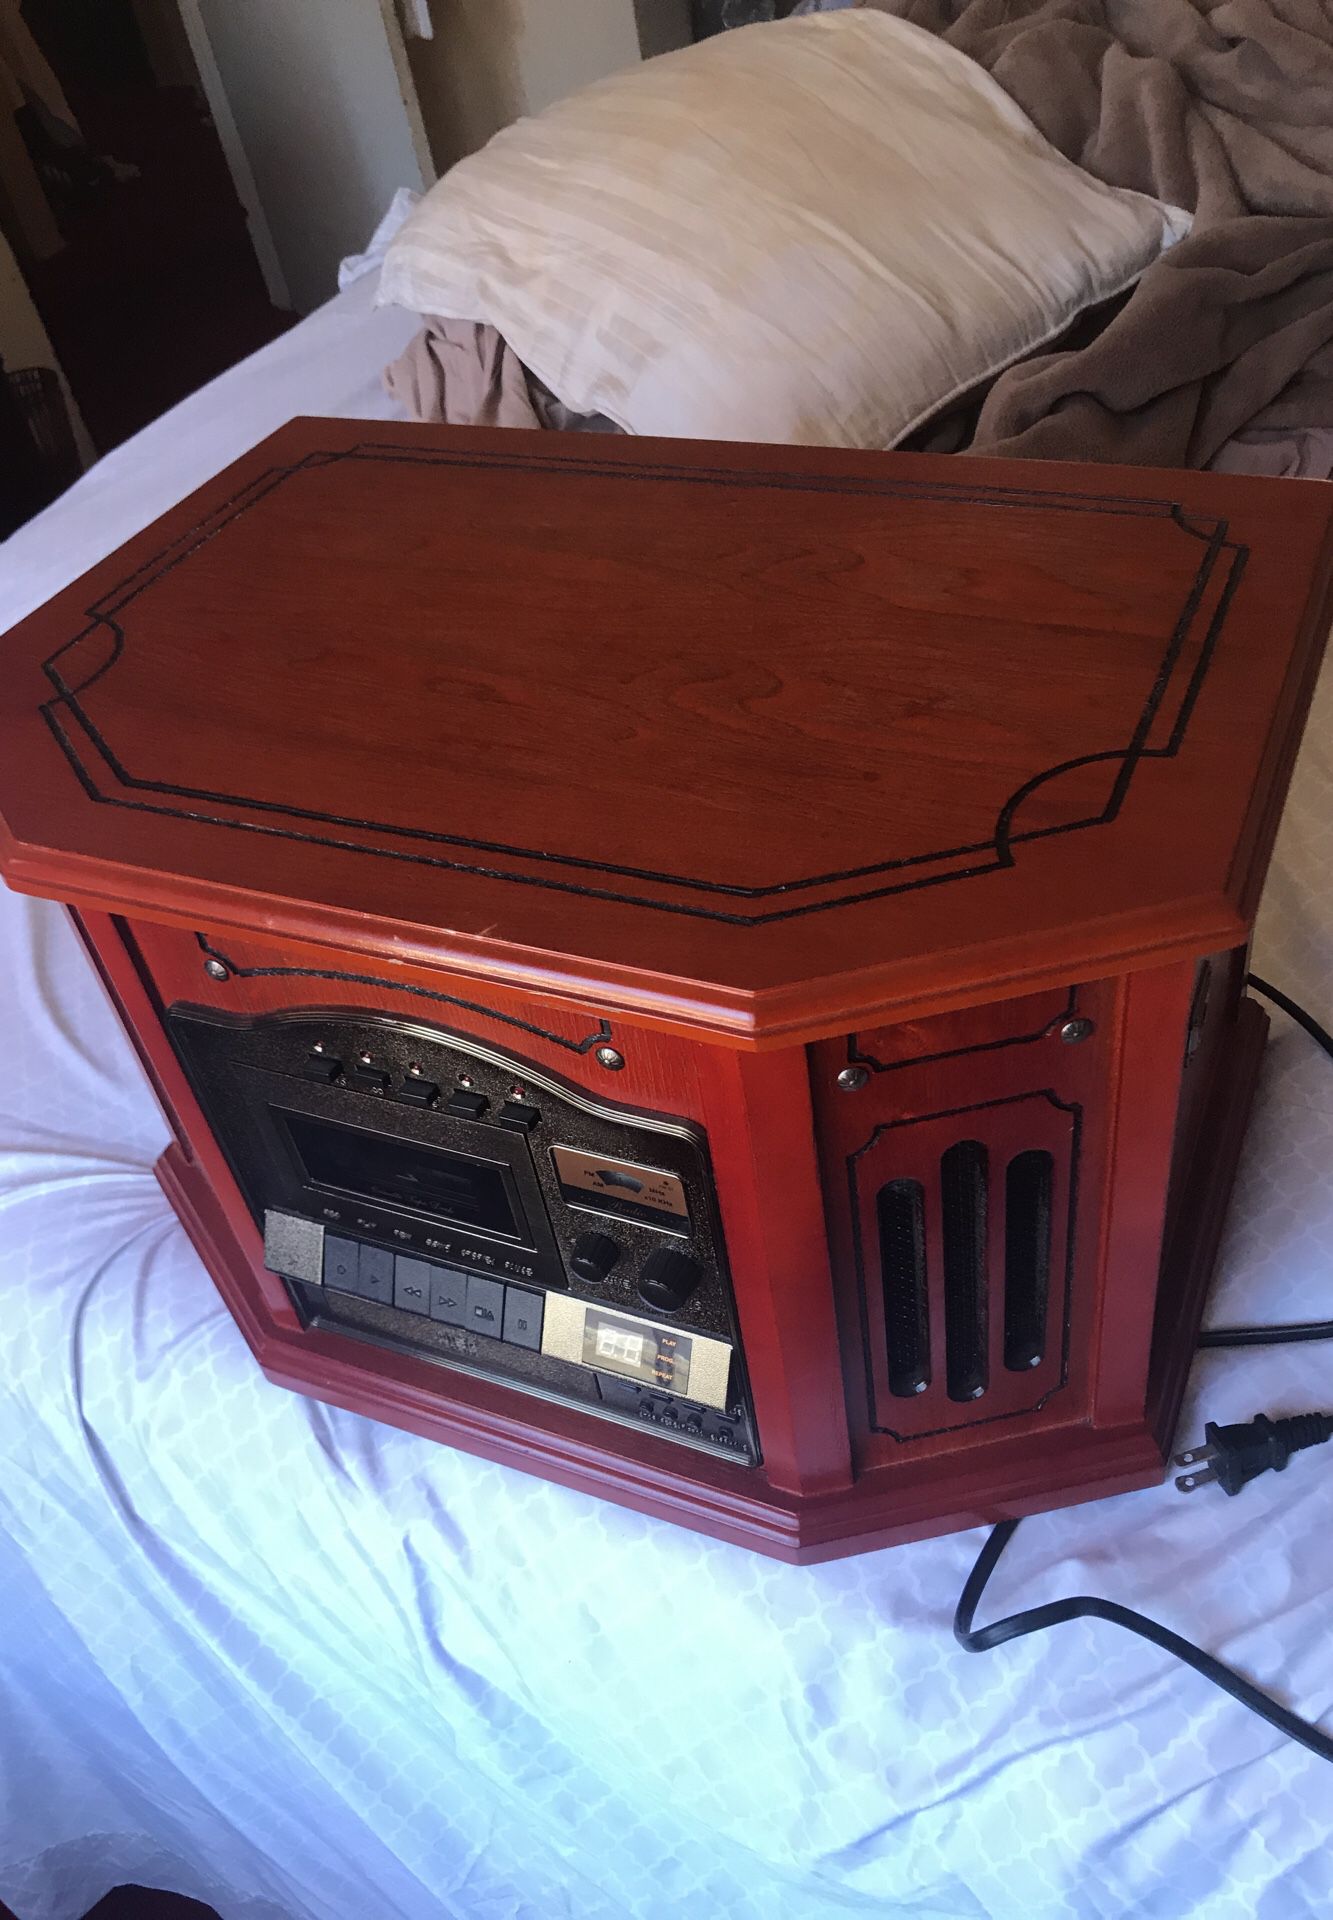 Victoria 7-1 audio player